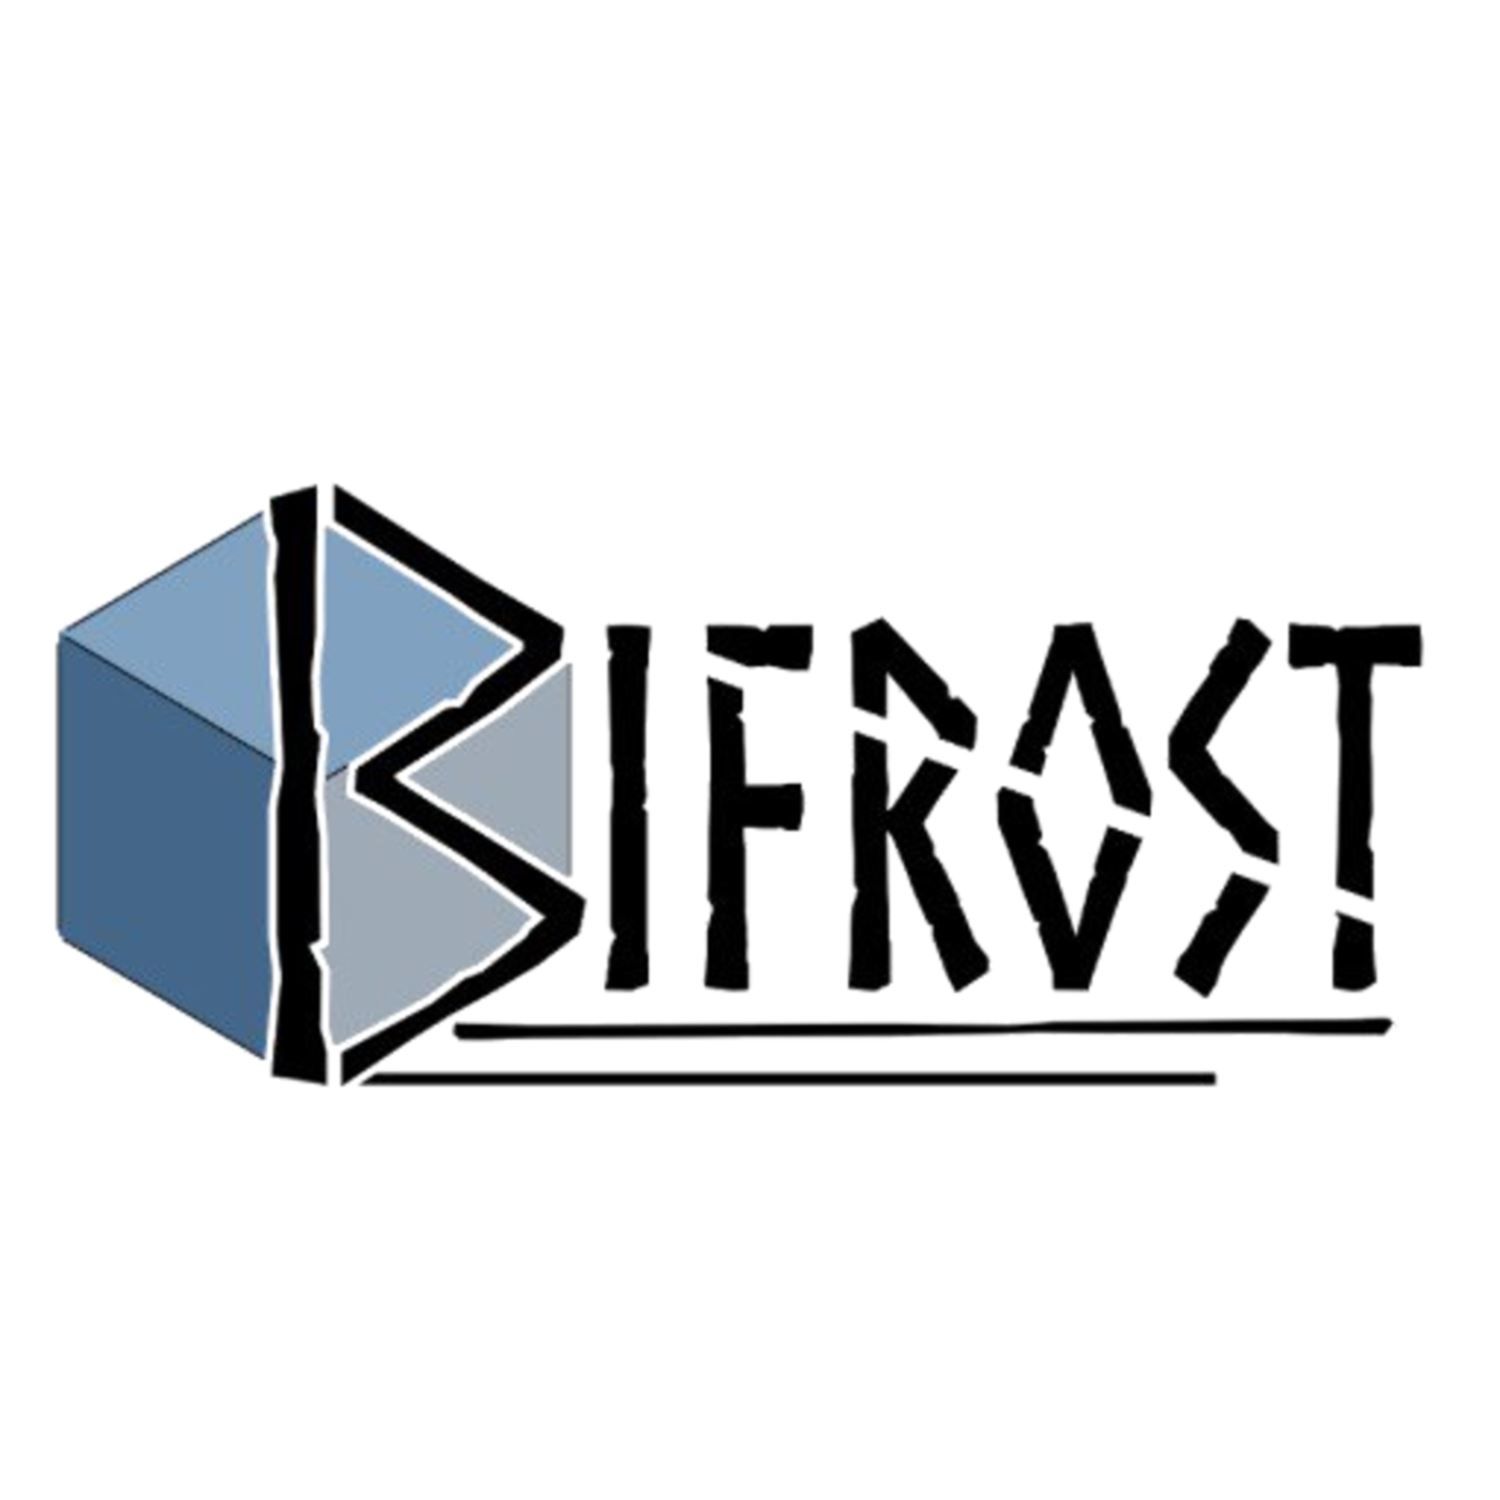 Bifrost is Blue Collar, Plebby & Scrappy